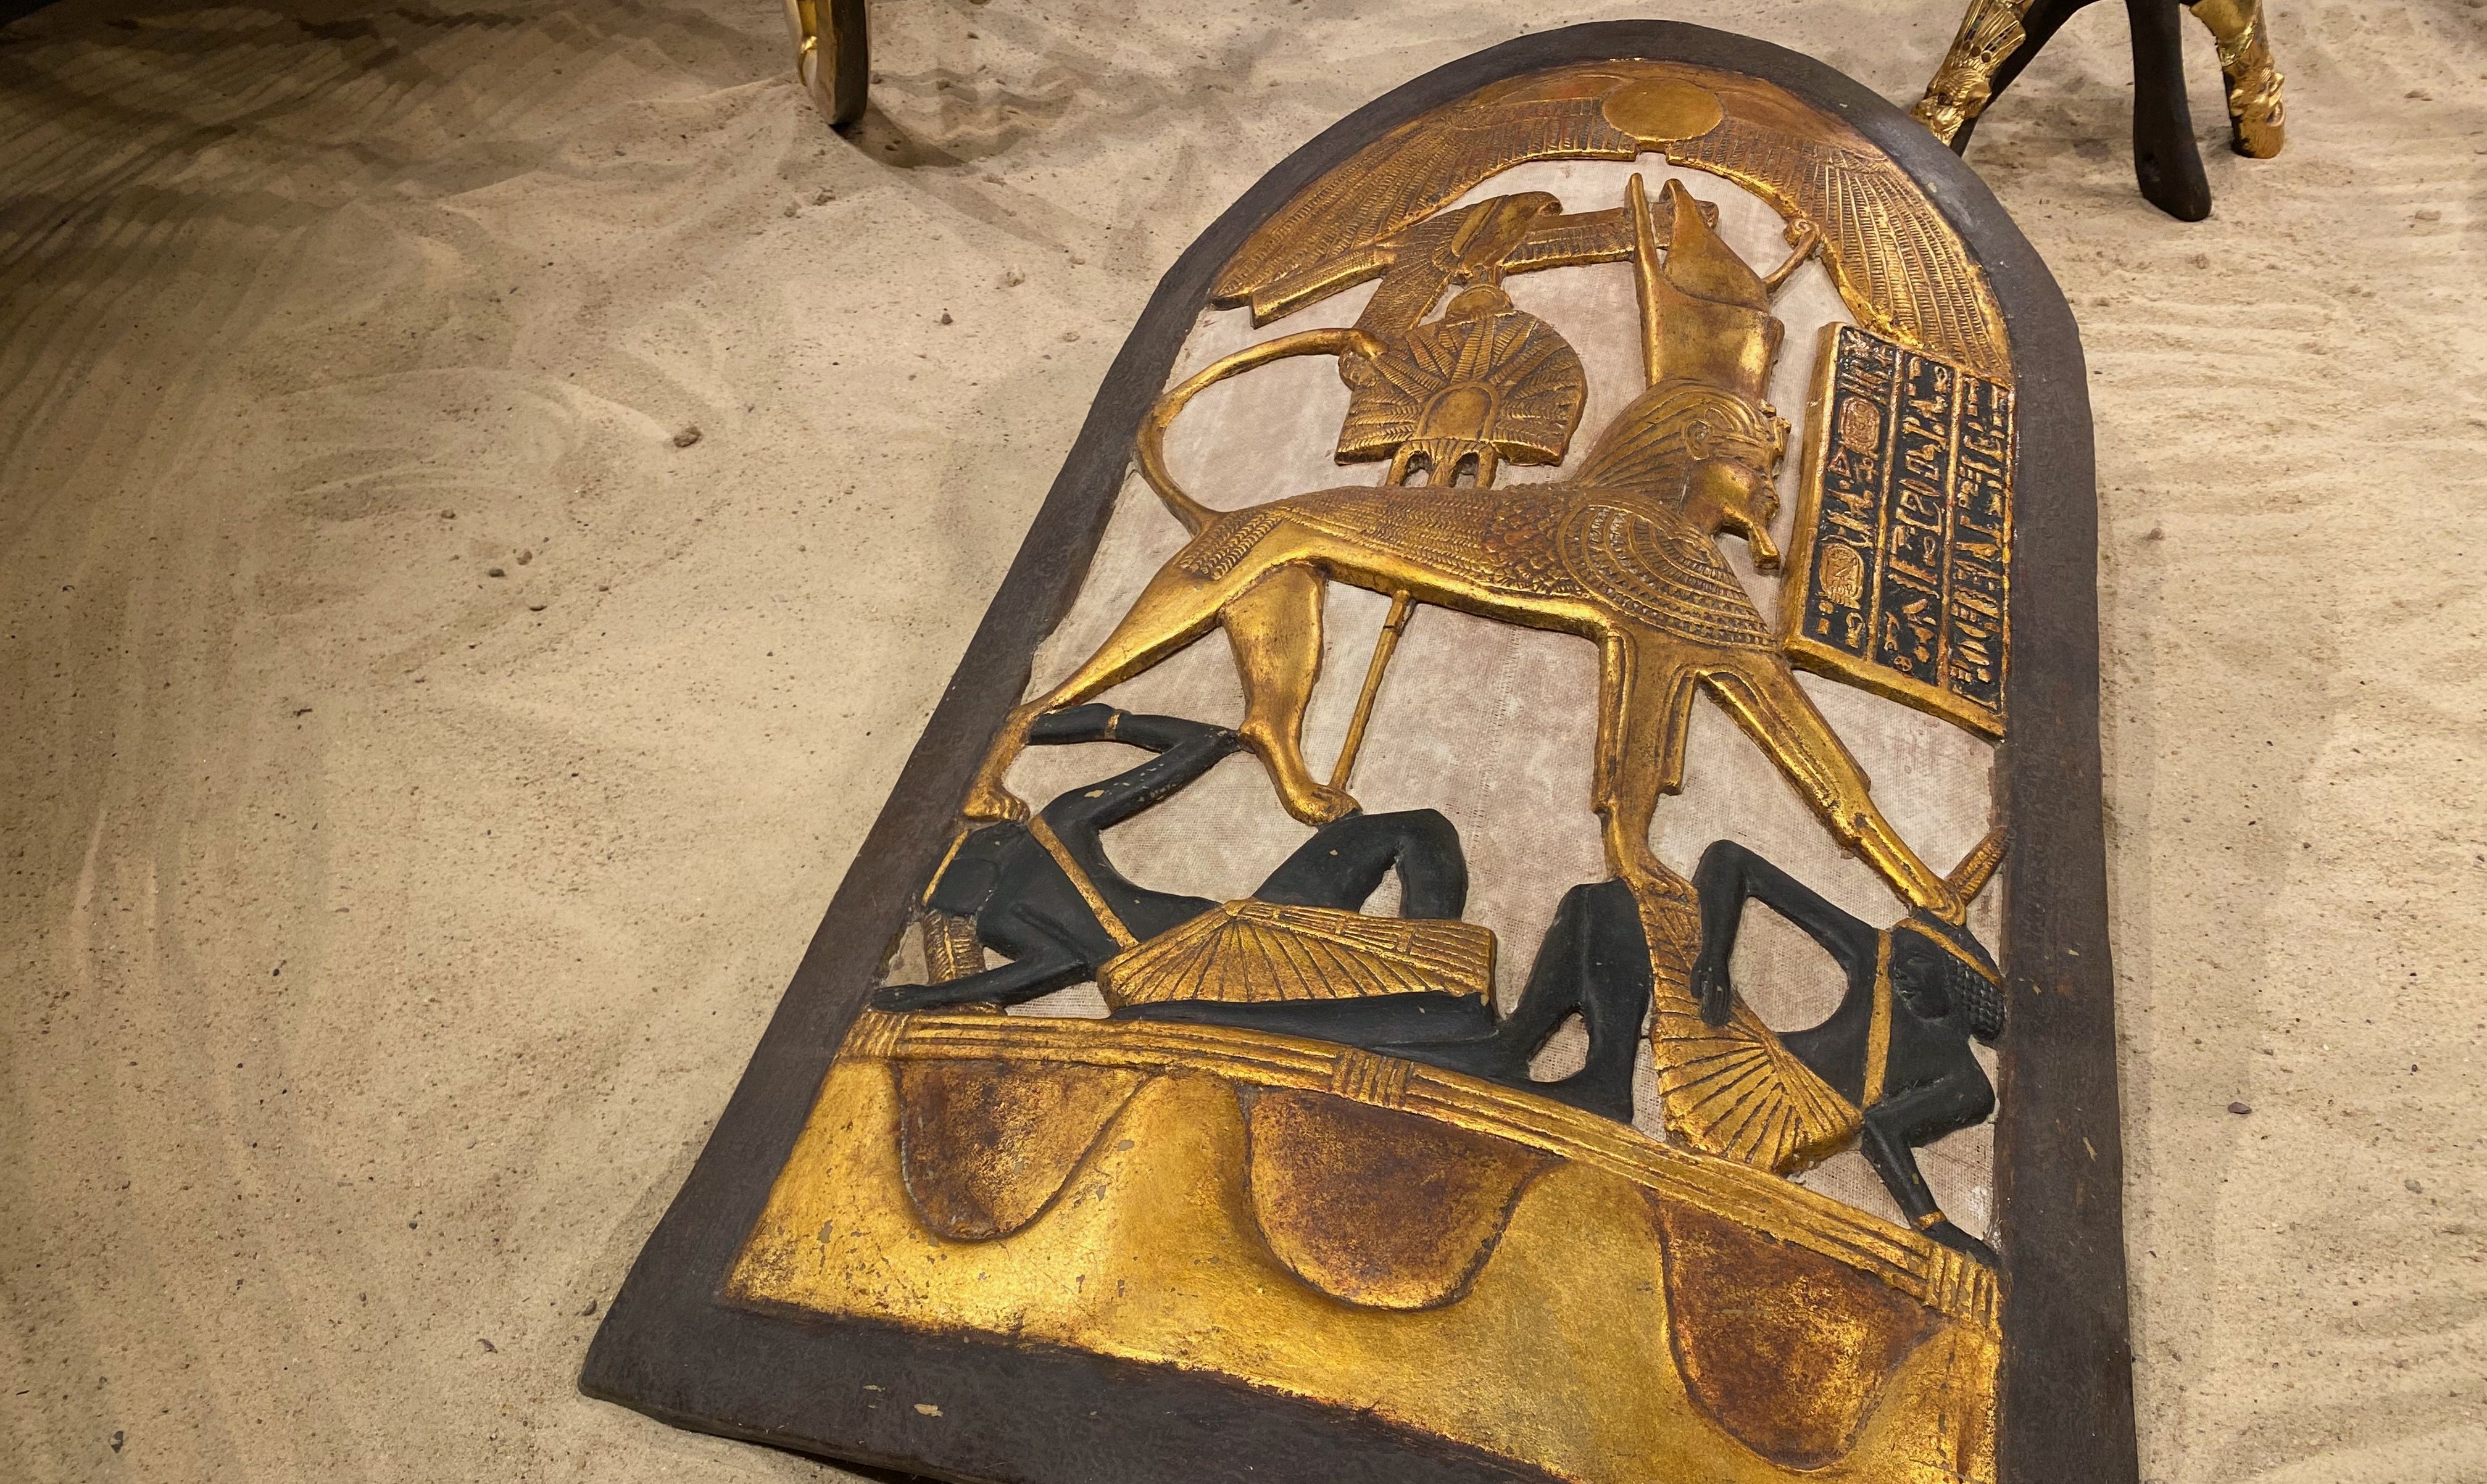 A shield depicting Tutankhamun as a golden sphinx